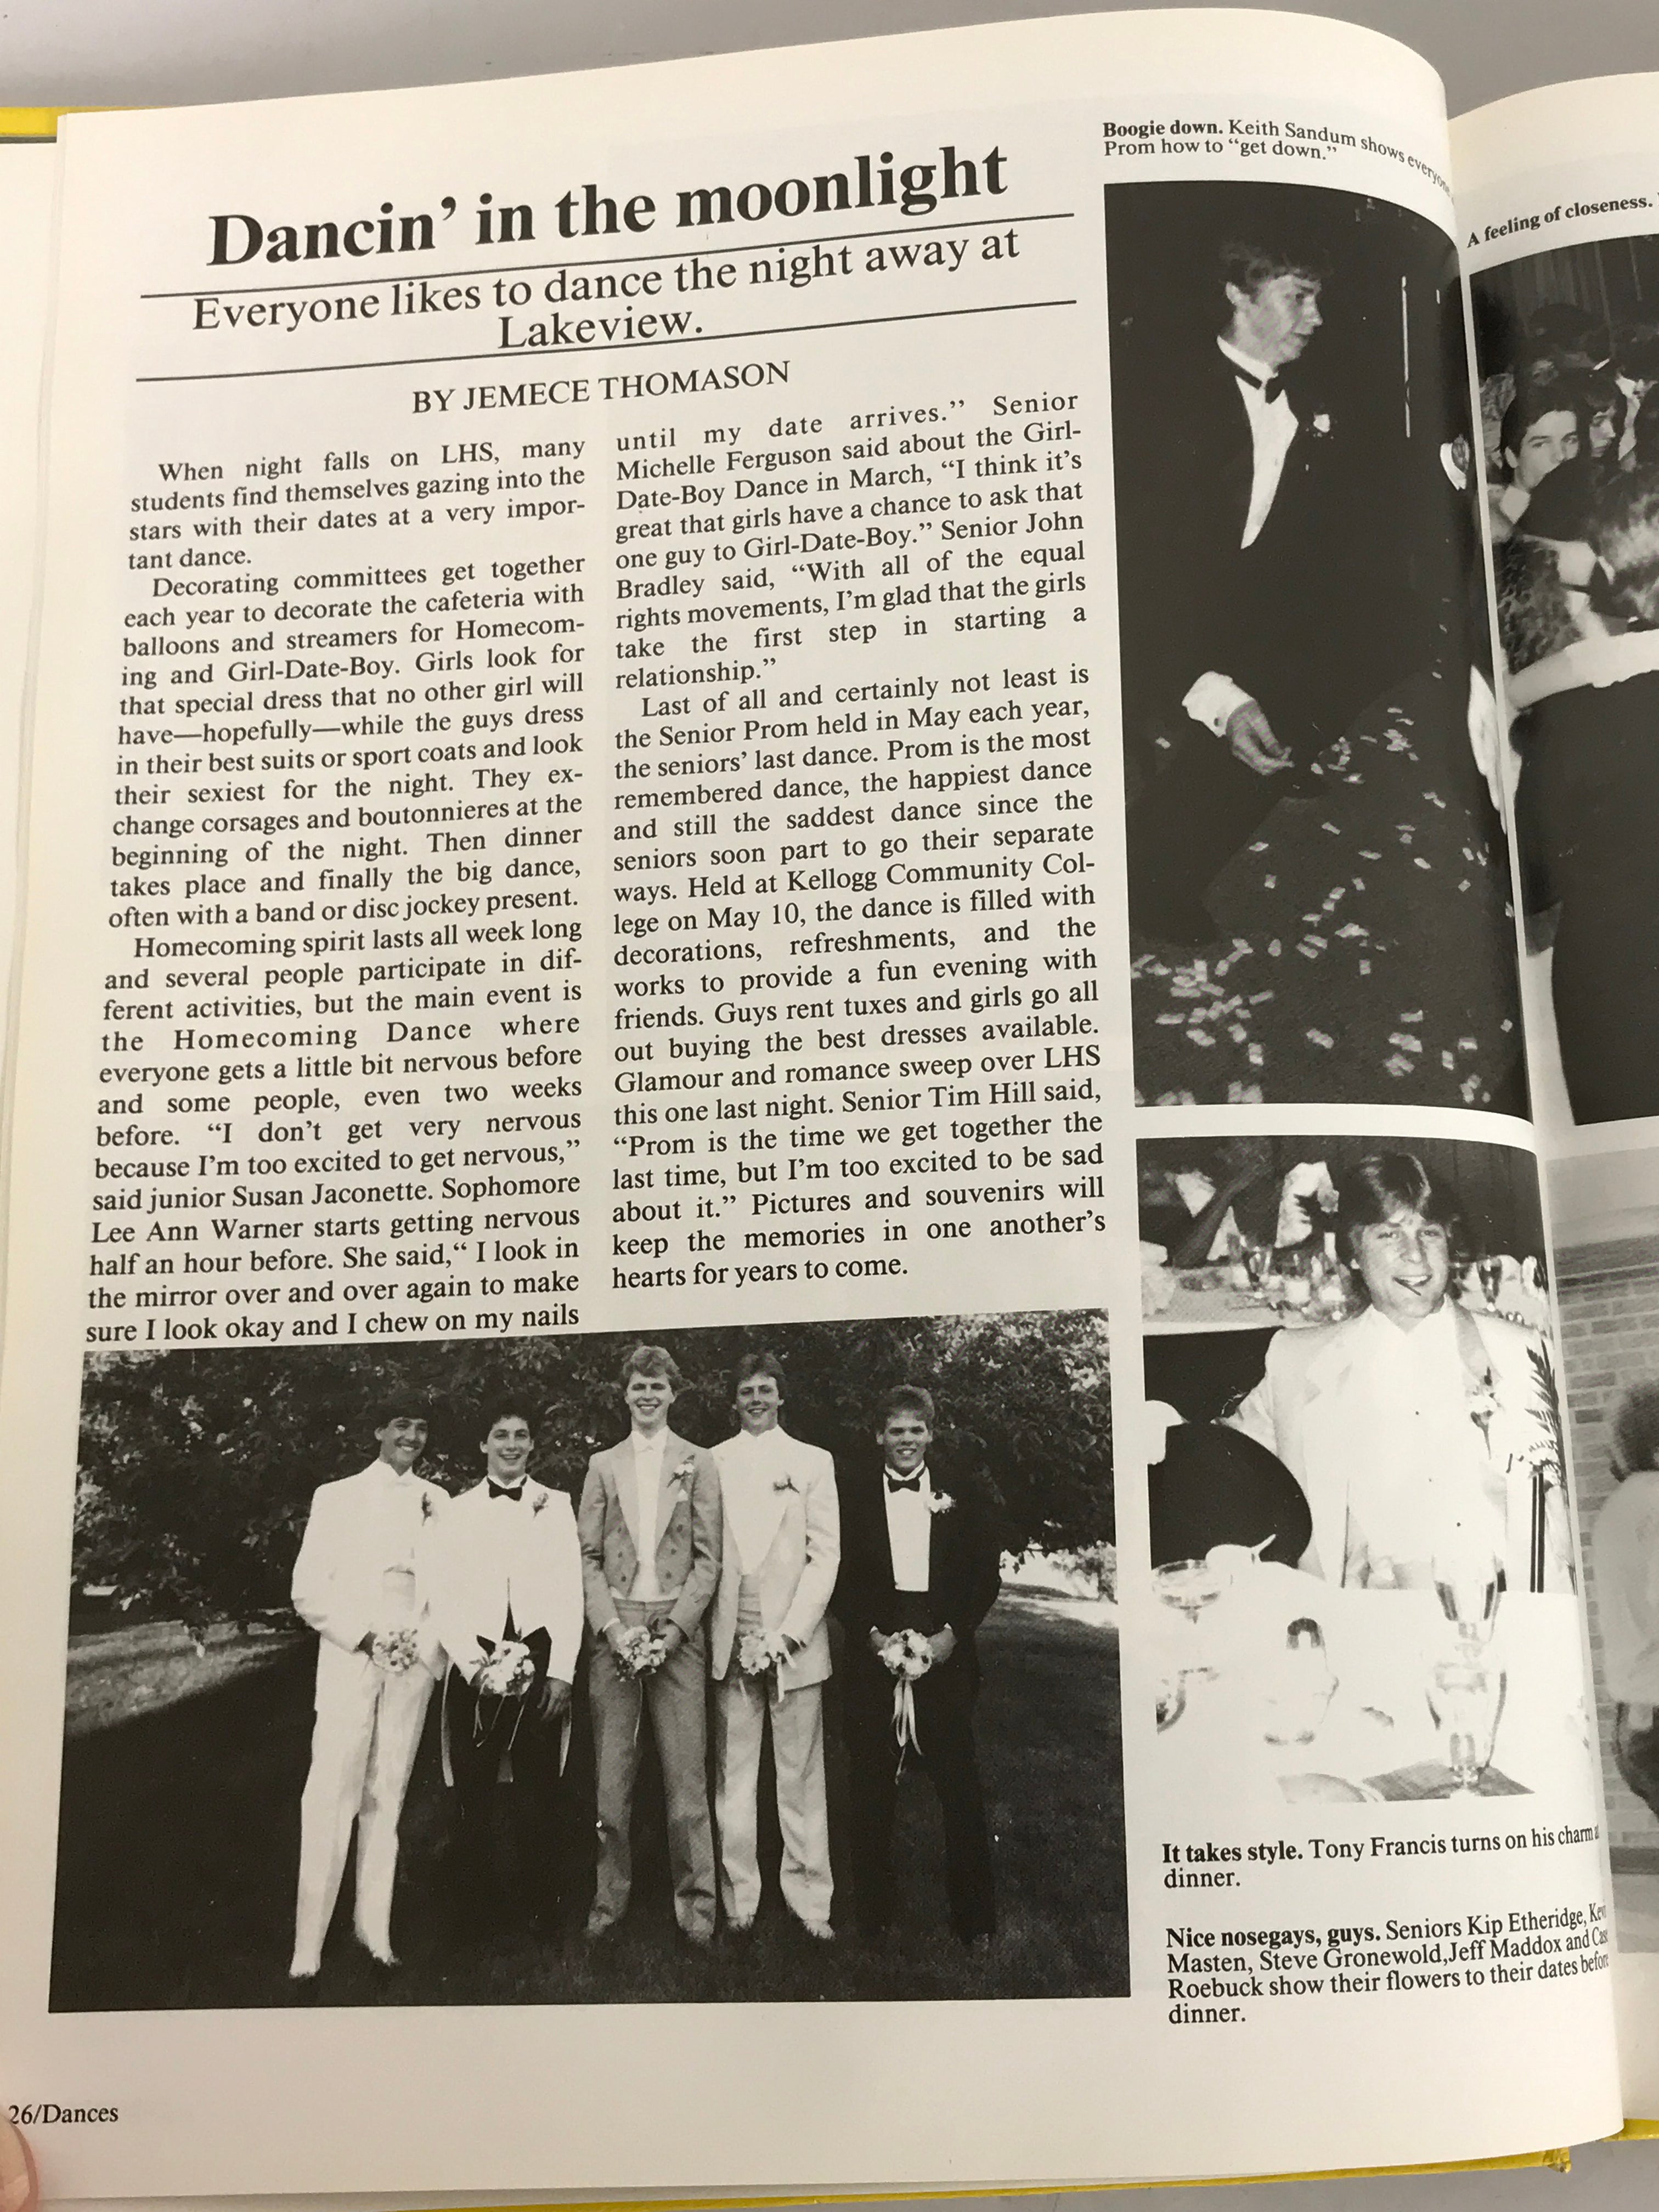 1986 Lakeview High School Yearbook Battle Creek Michigan HC